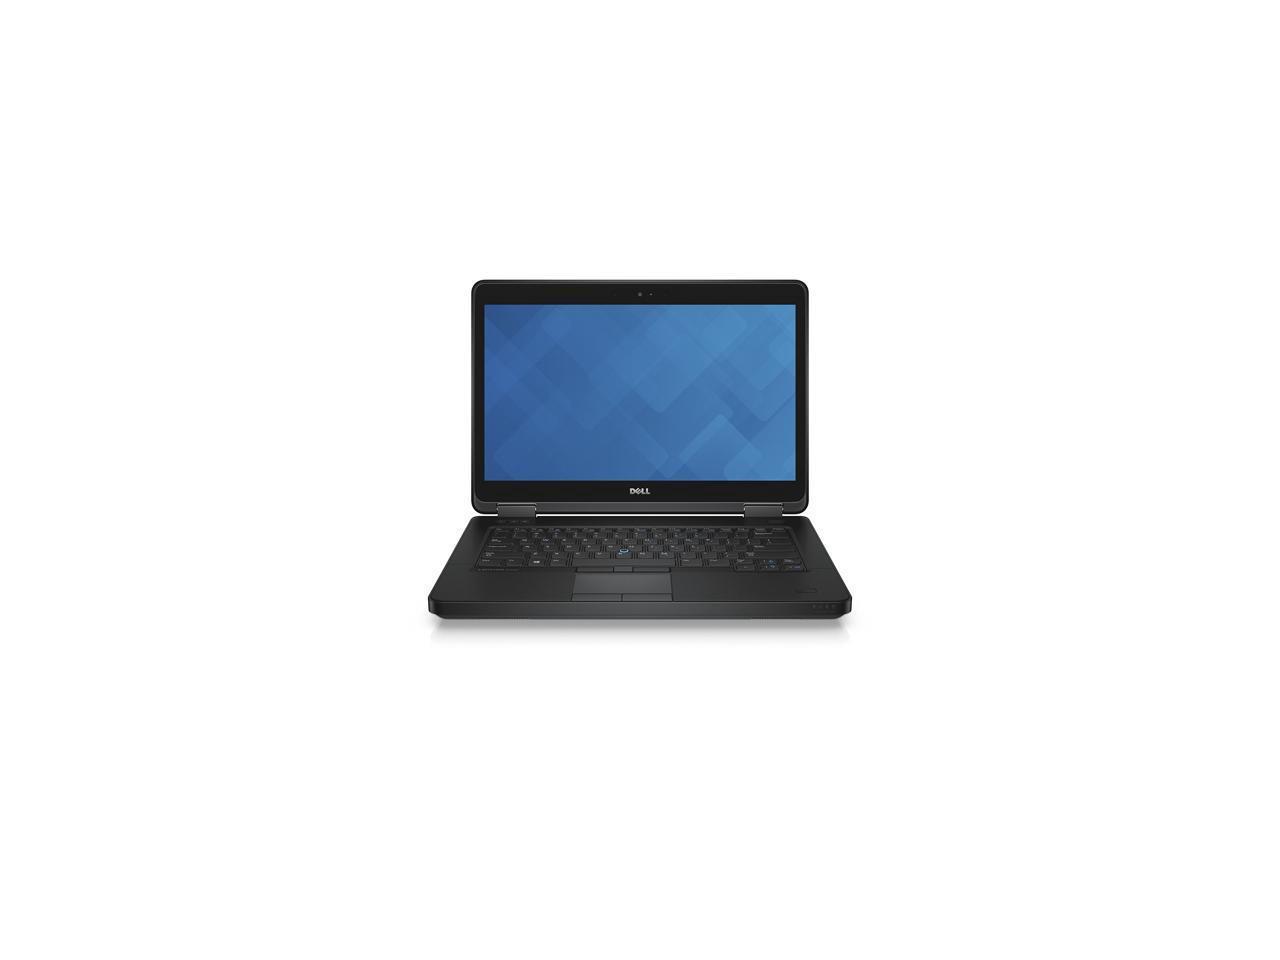 Refurbished Dell Latitude E5440 Laptop Computer Intel Core i5 Processor, 16GB Ram, 128GB Solid State Drive, Windows 10 Operating System, 1 Year Warranty